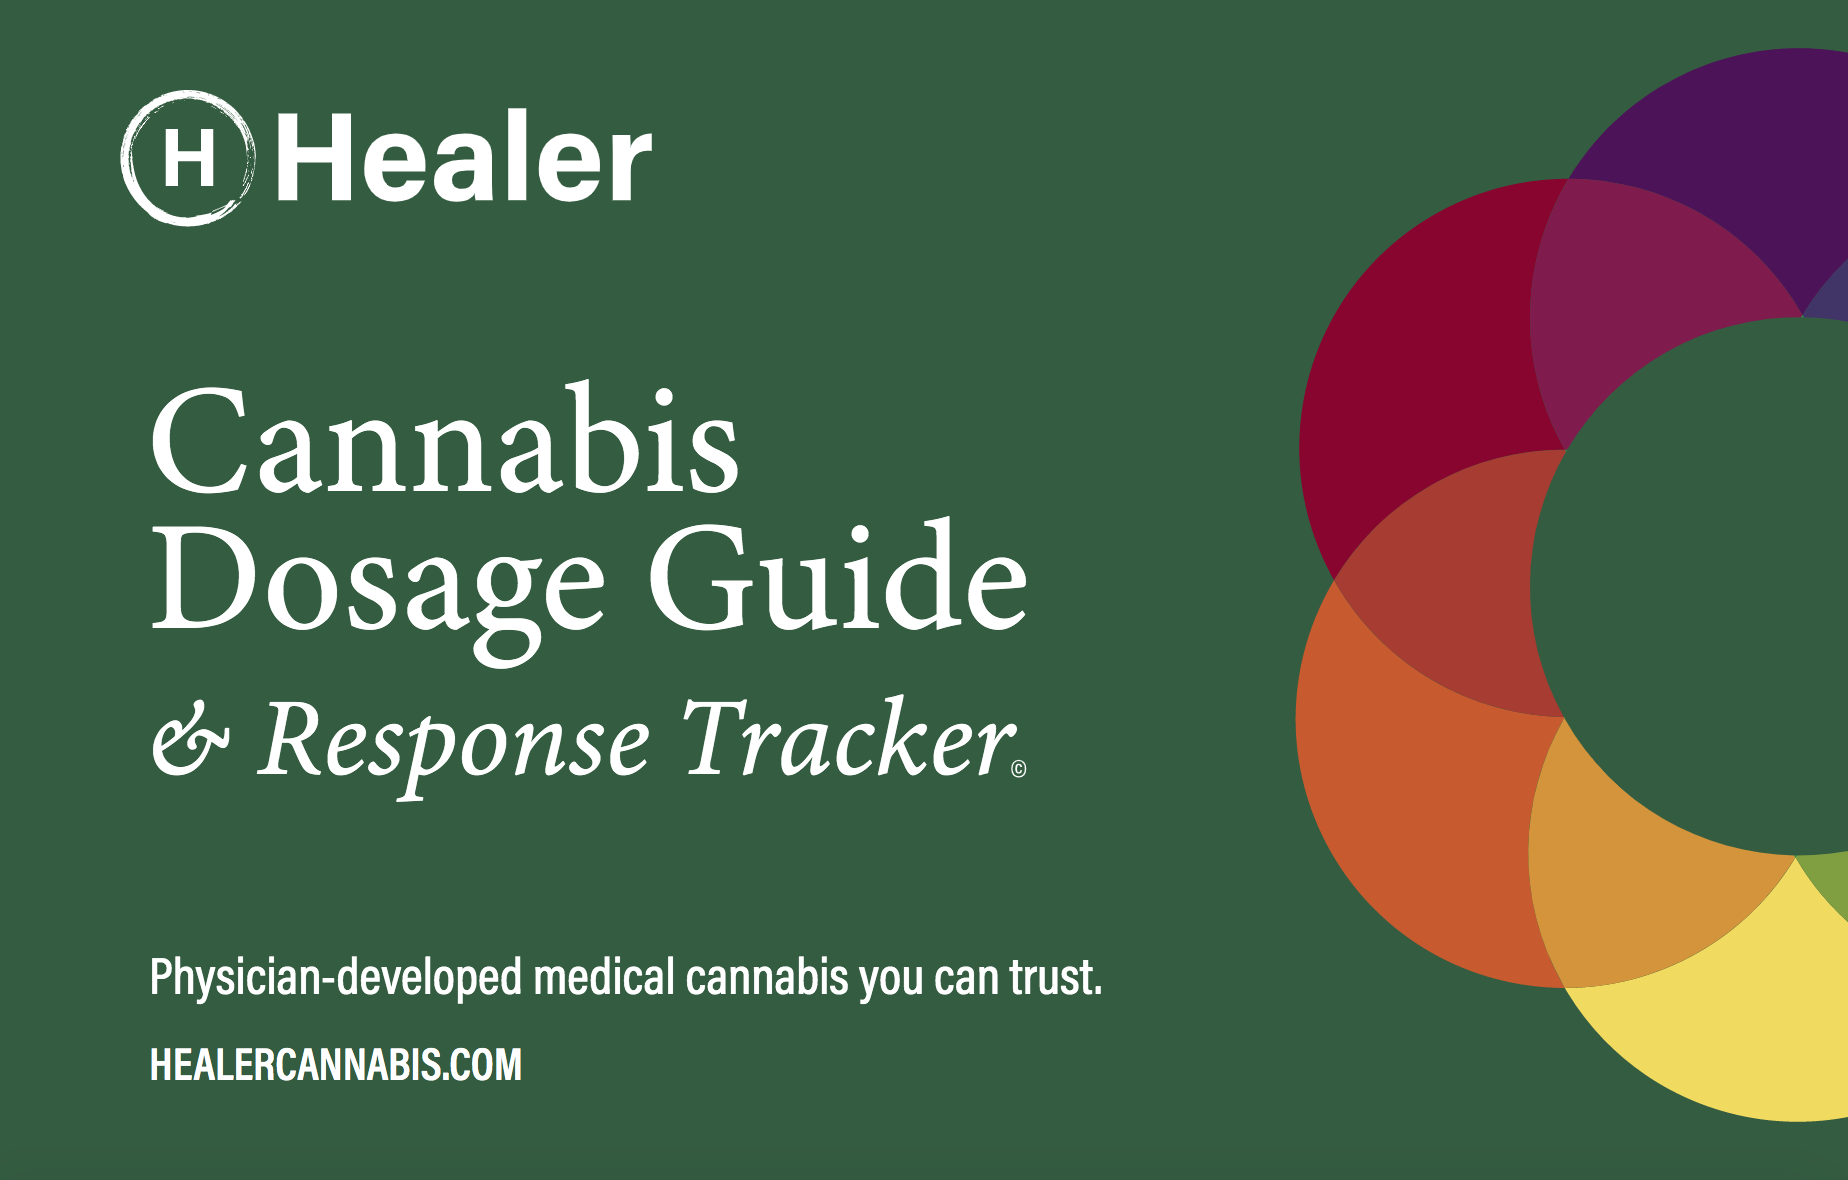 Healer Cannabis Dosage Guide